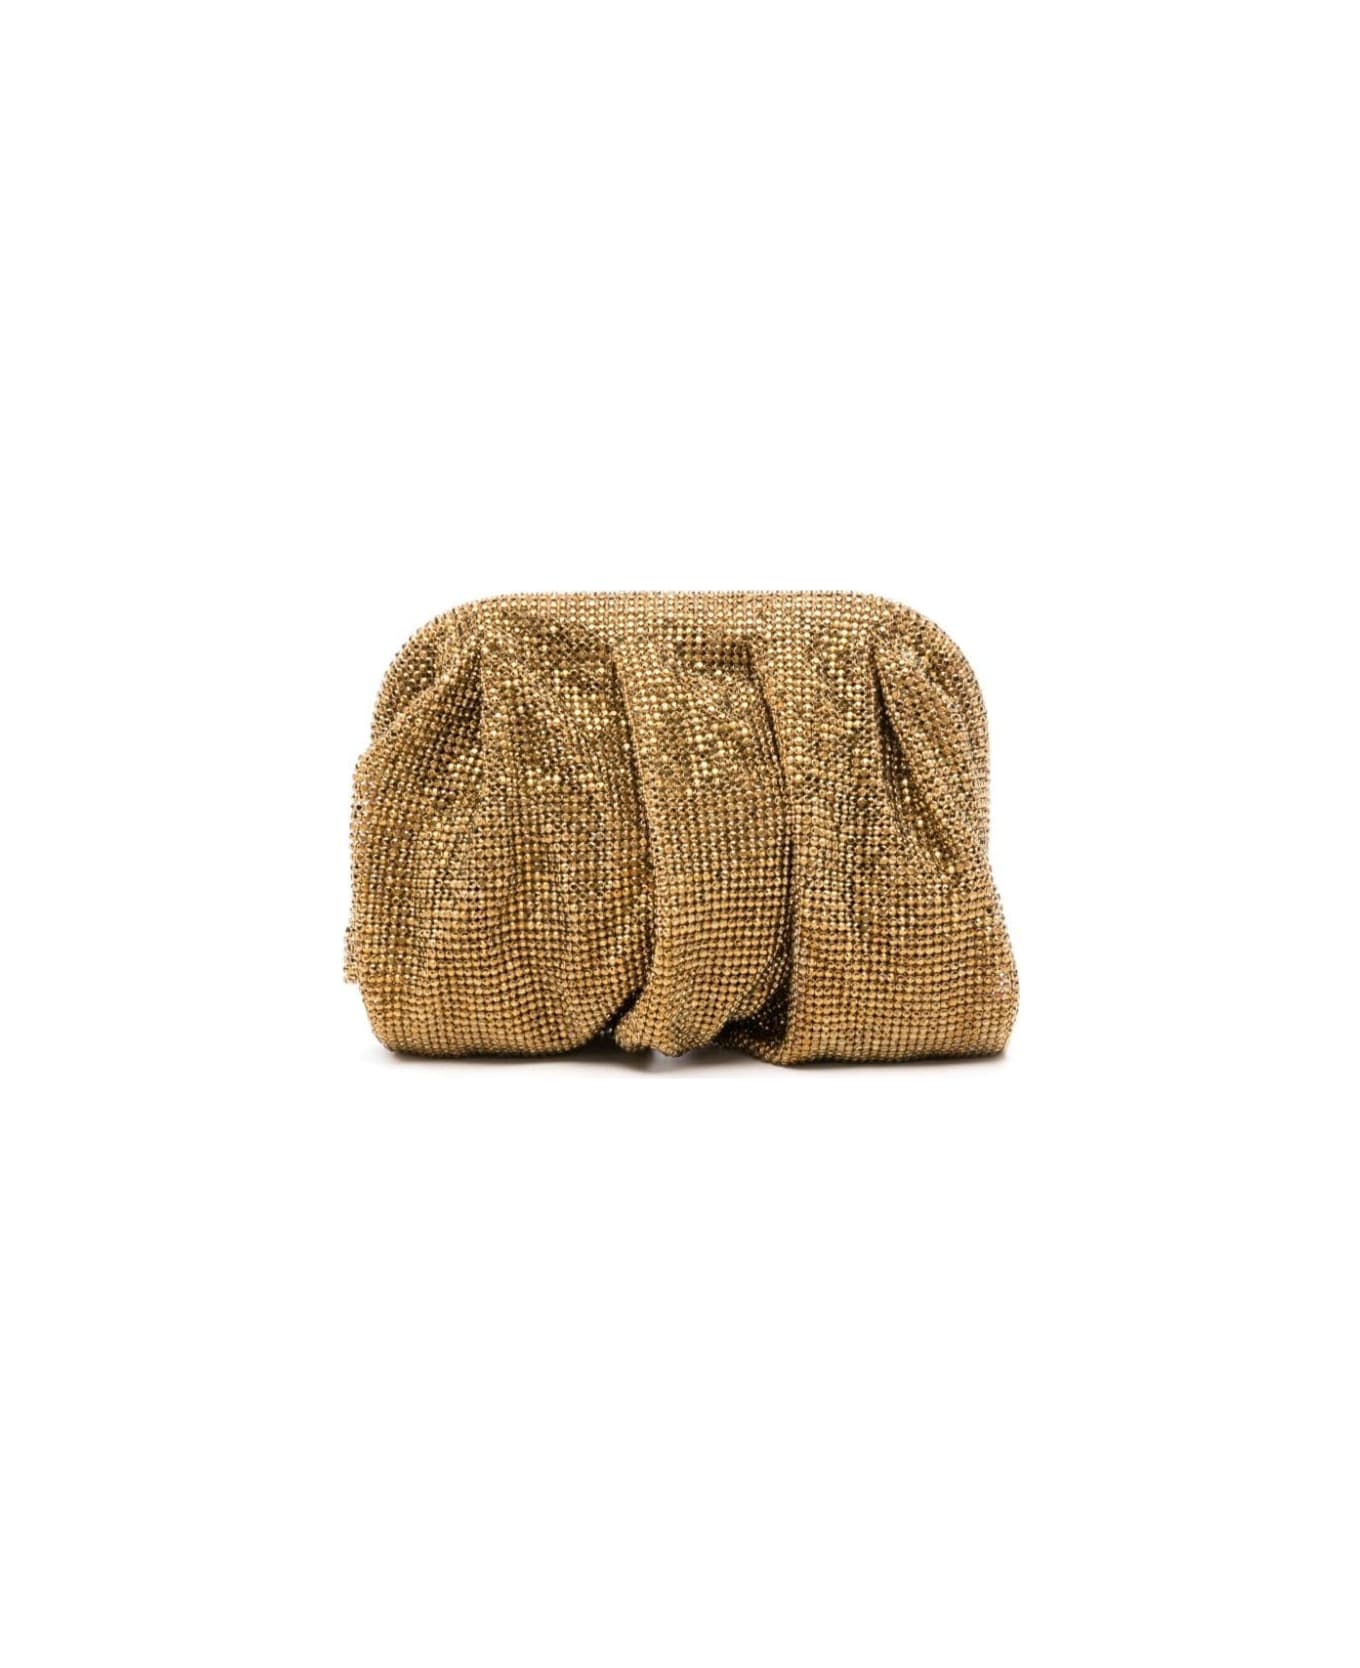 Benedetta Bruzziches 'venus La Petite' Gold Clutch Bag In Fabric With Allover Crystals Woman - Metallic クラッチバッグ